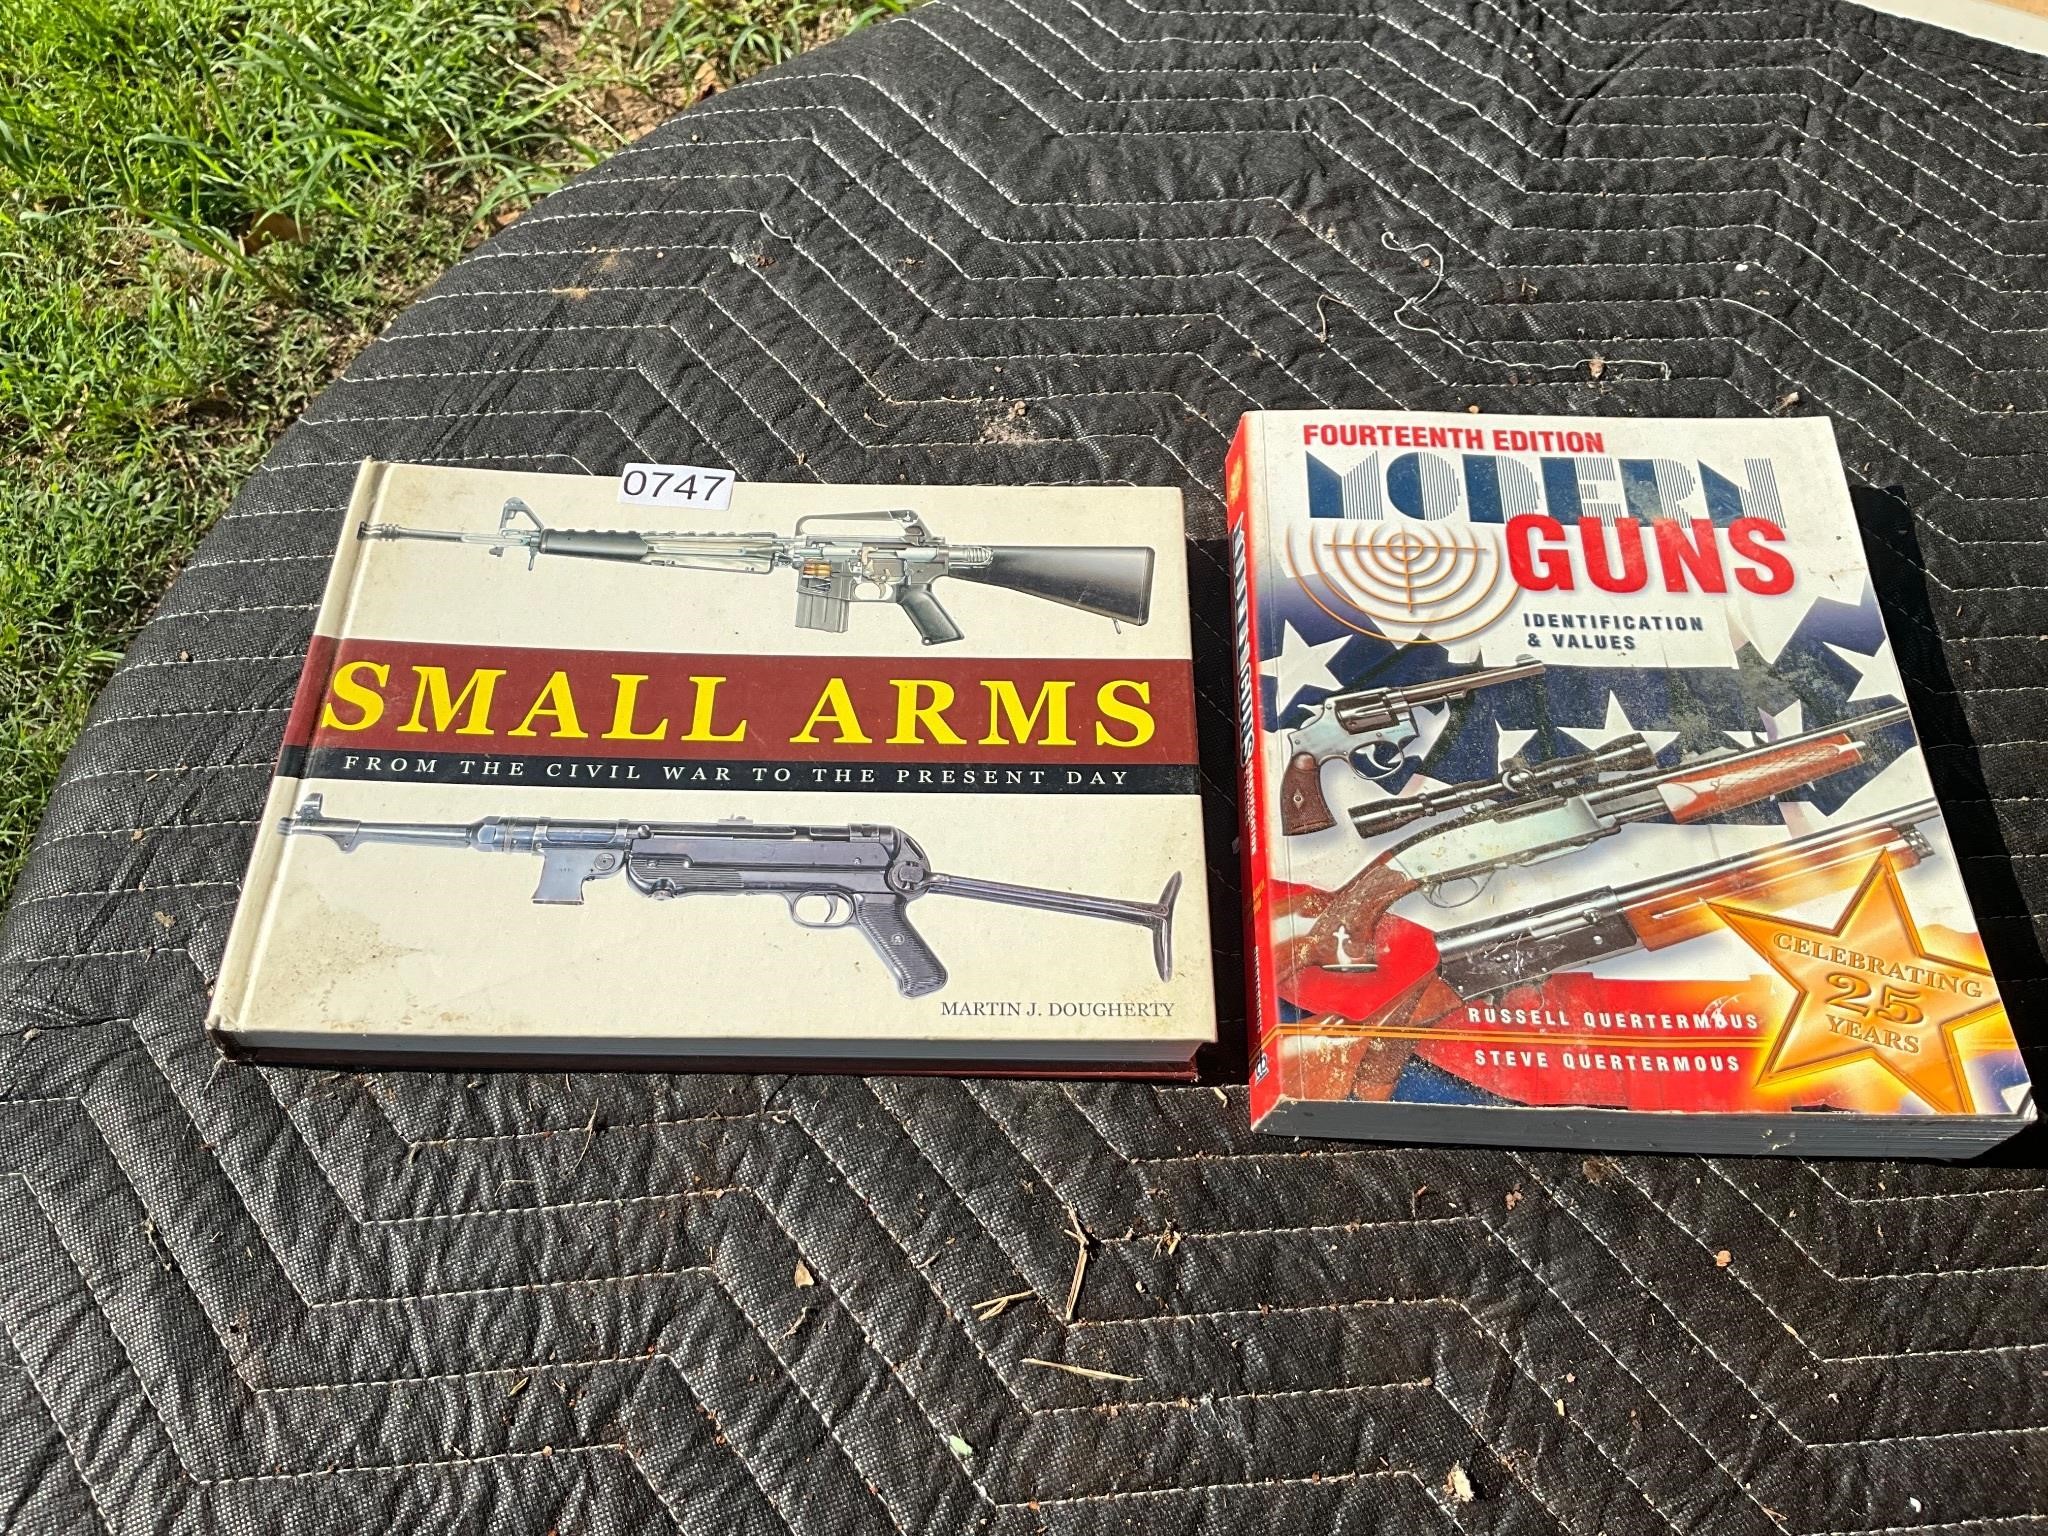 Small arms and modern gun books